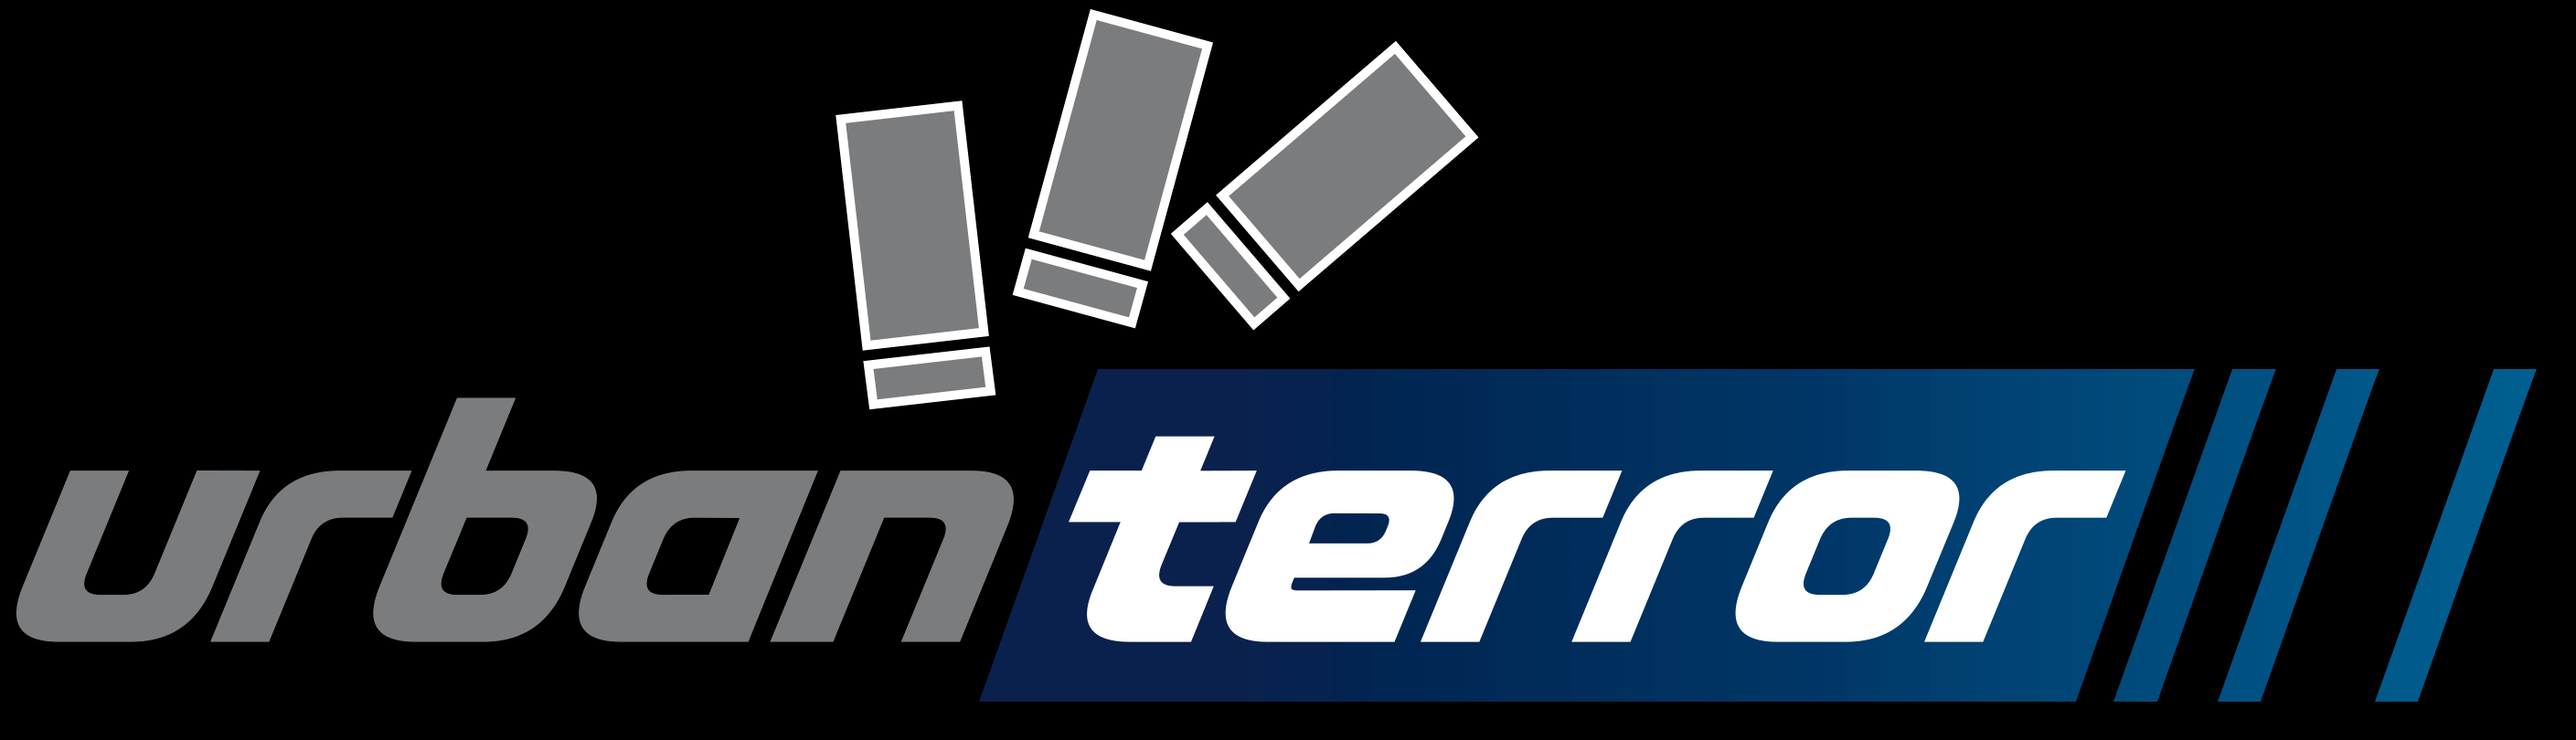 Terror Logo - Urban Terror Support : Image